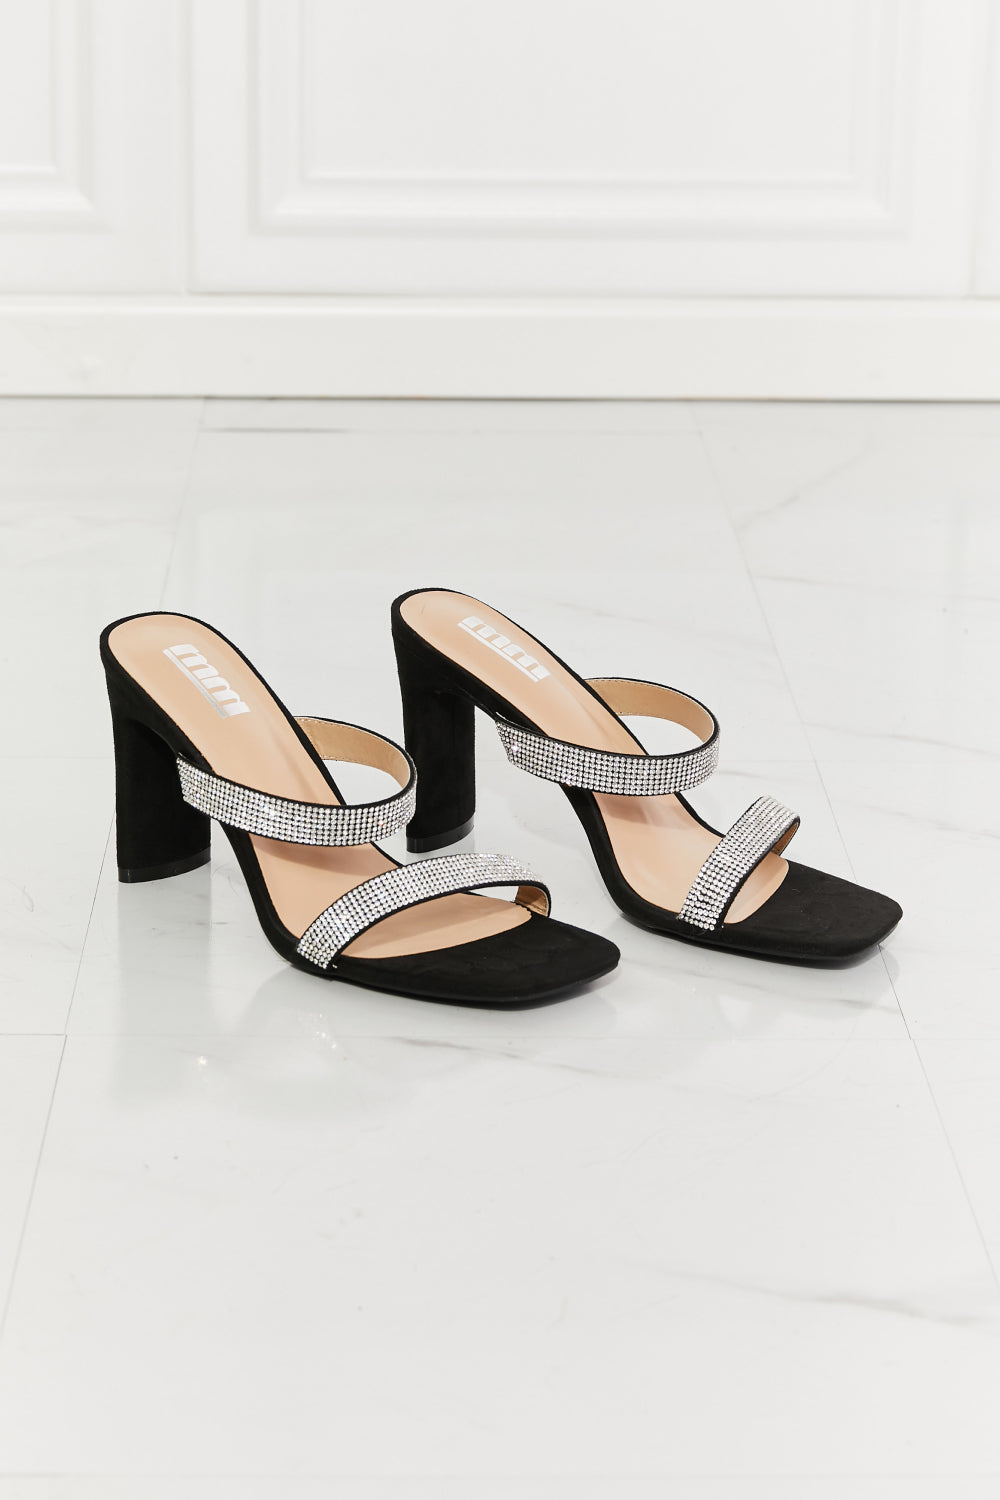 MMShoes Leave A Little Sparkle Rhinestone Block Heel Sandal in Black - BEAUTY COSMOTICS SHOP